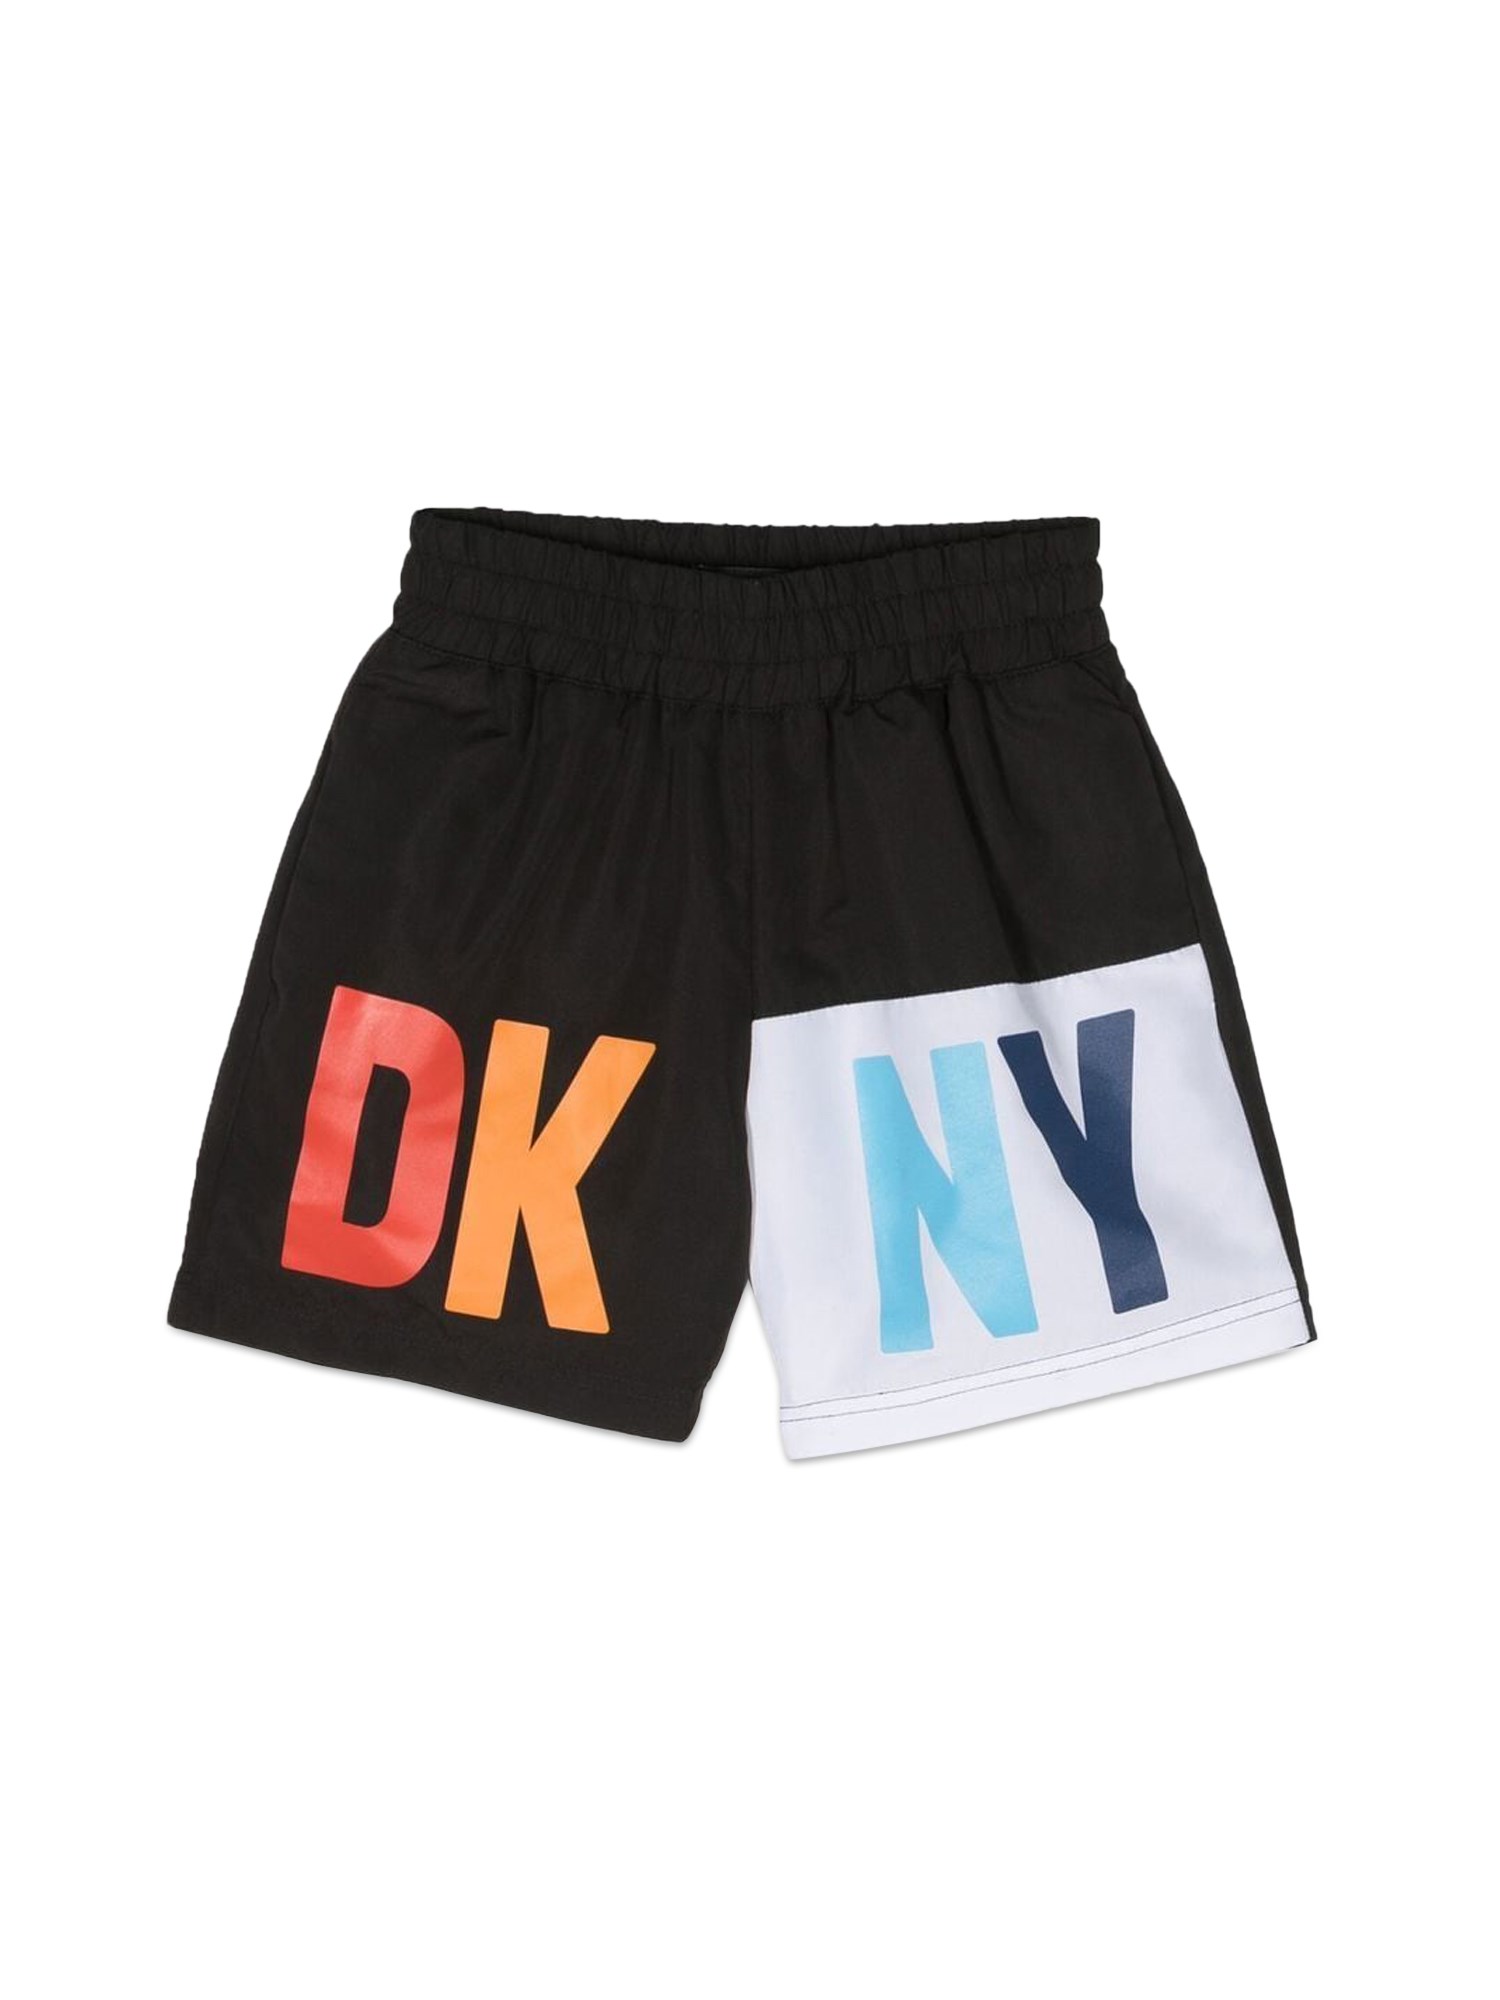 Dkny Kids' Boys Black Logo Swim Shorts In Multicolour